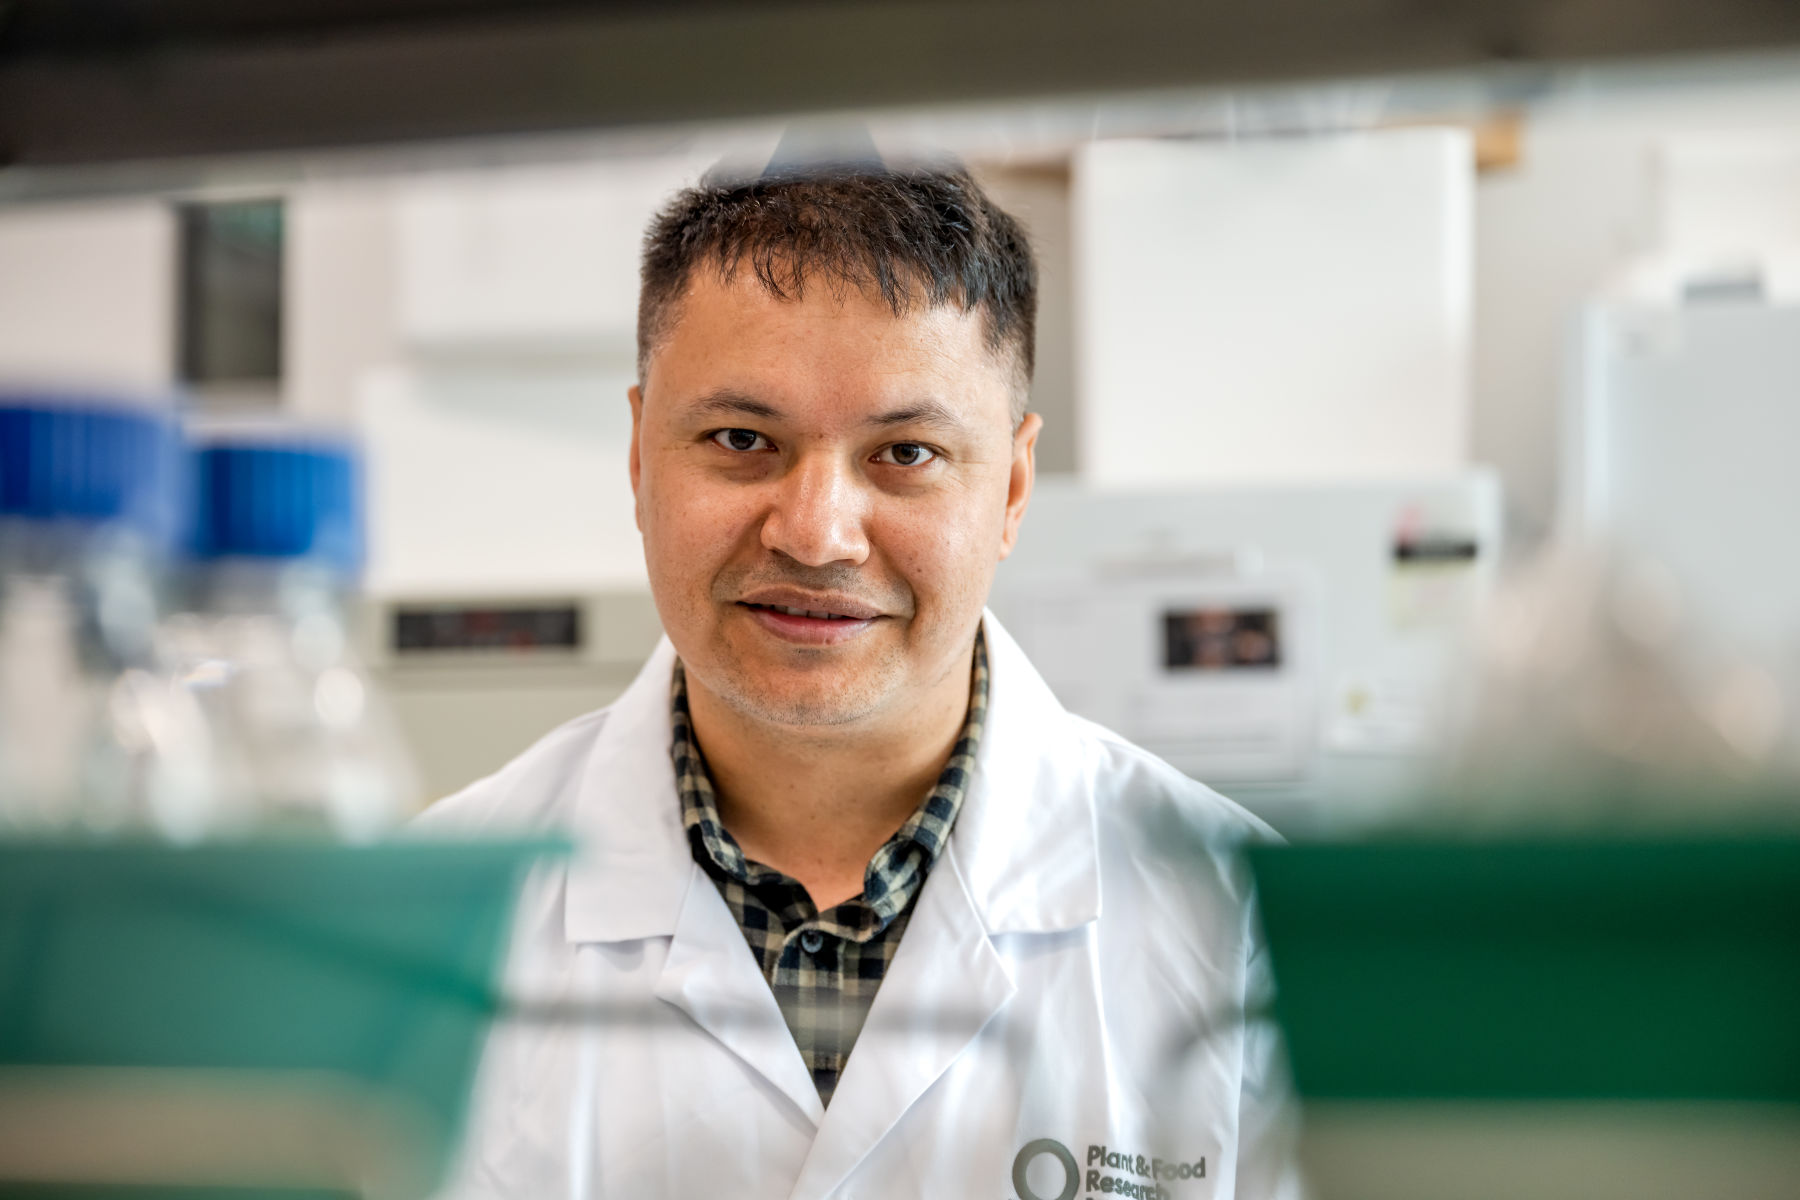 Dr Roshan Khadka: Powering health devices with biowaste